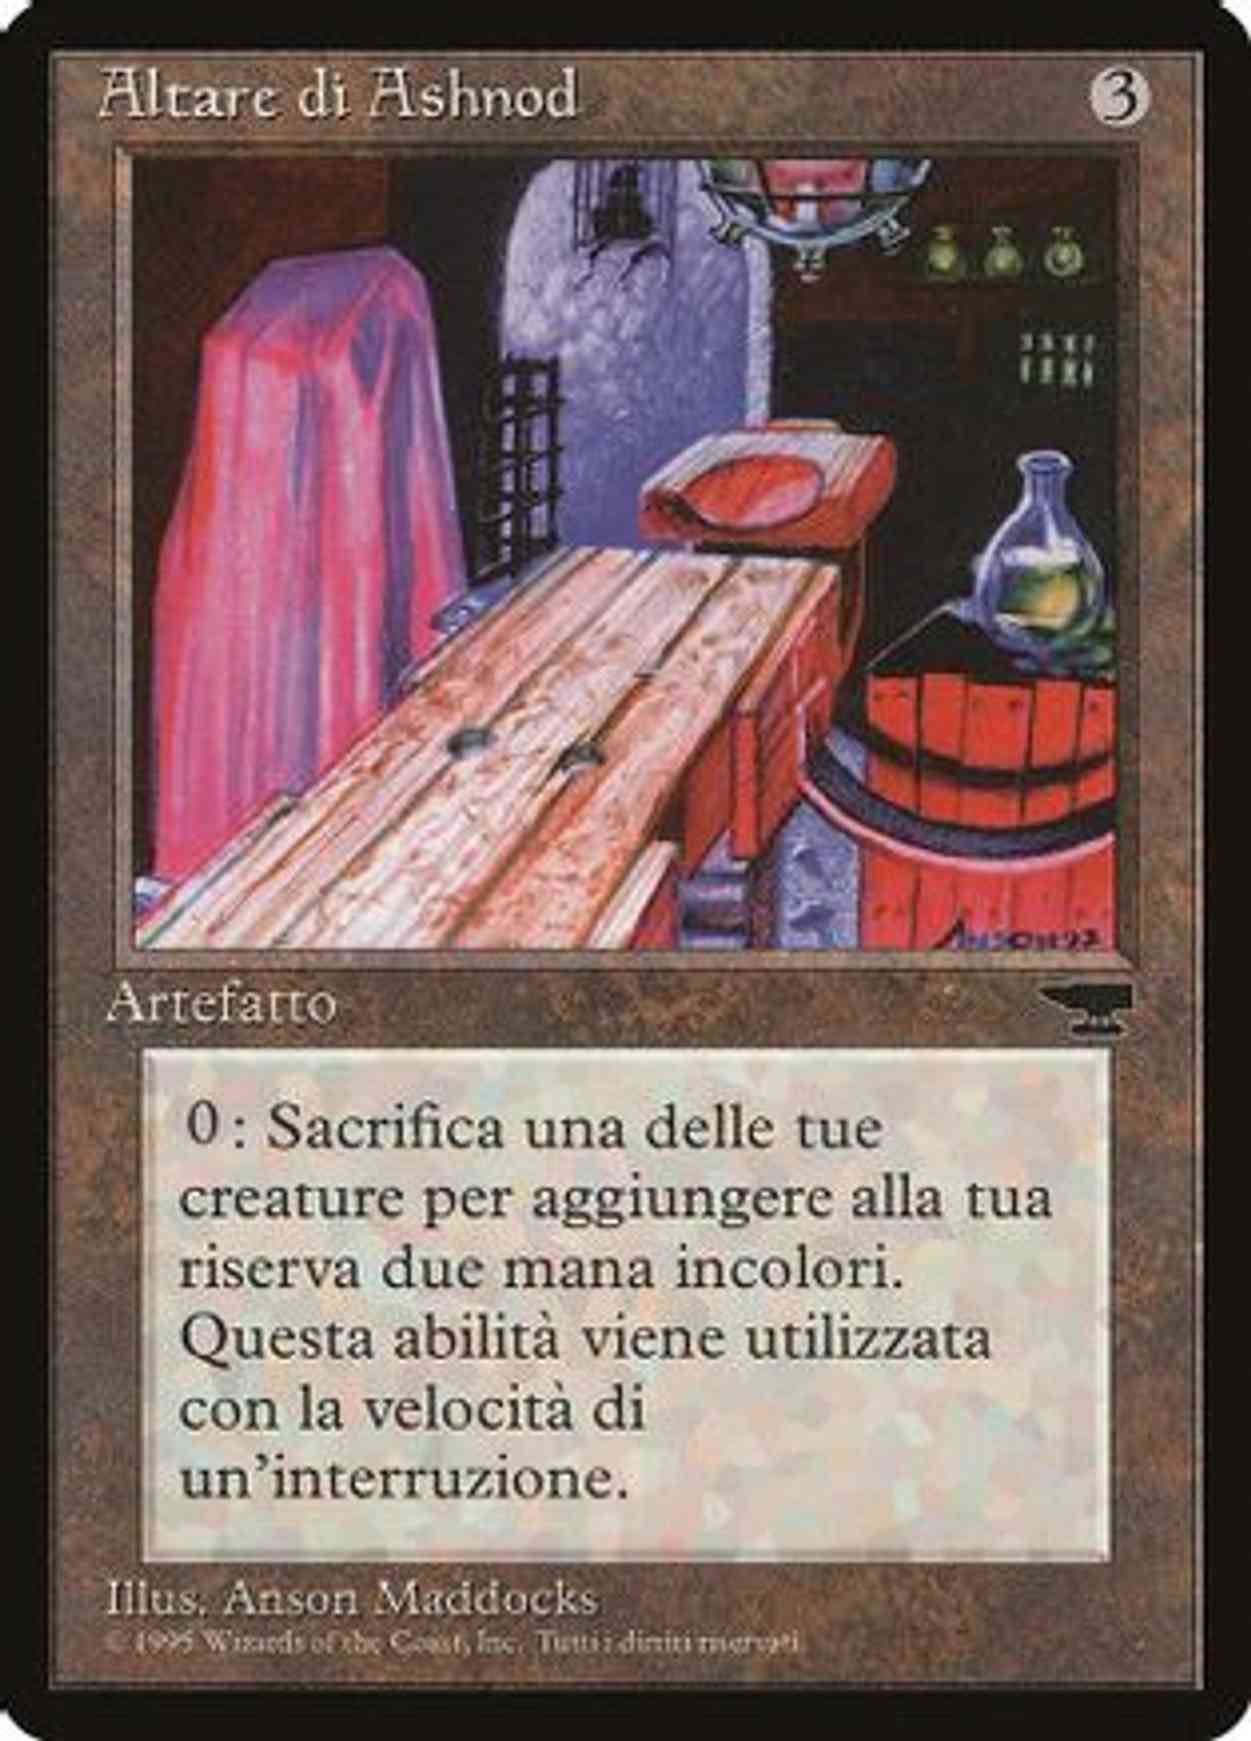 Ashnod's Altar (Italian) - "Altare di Ashnod" magic card front